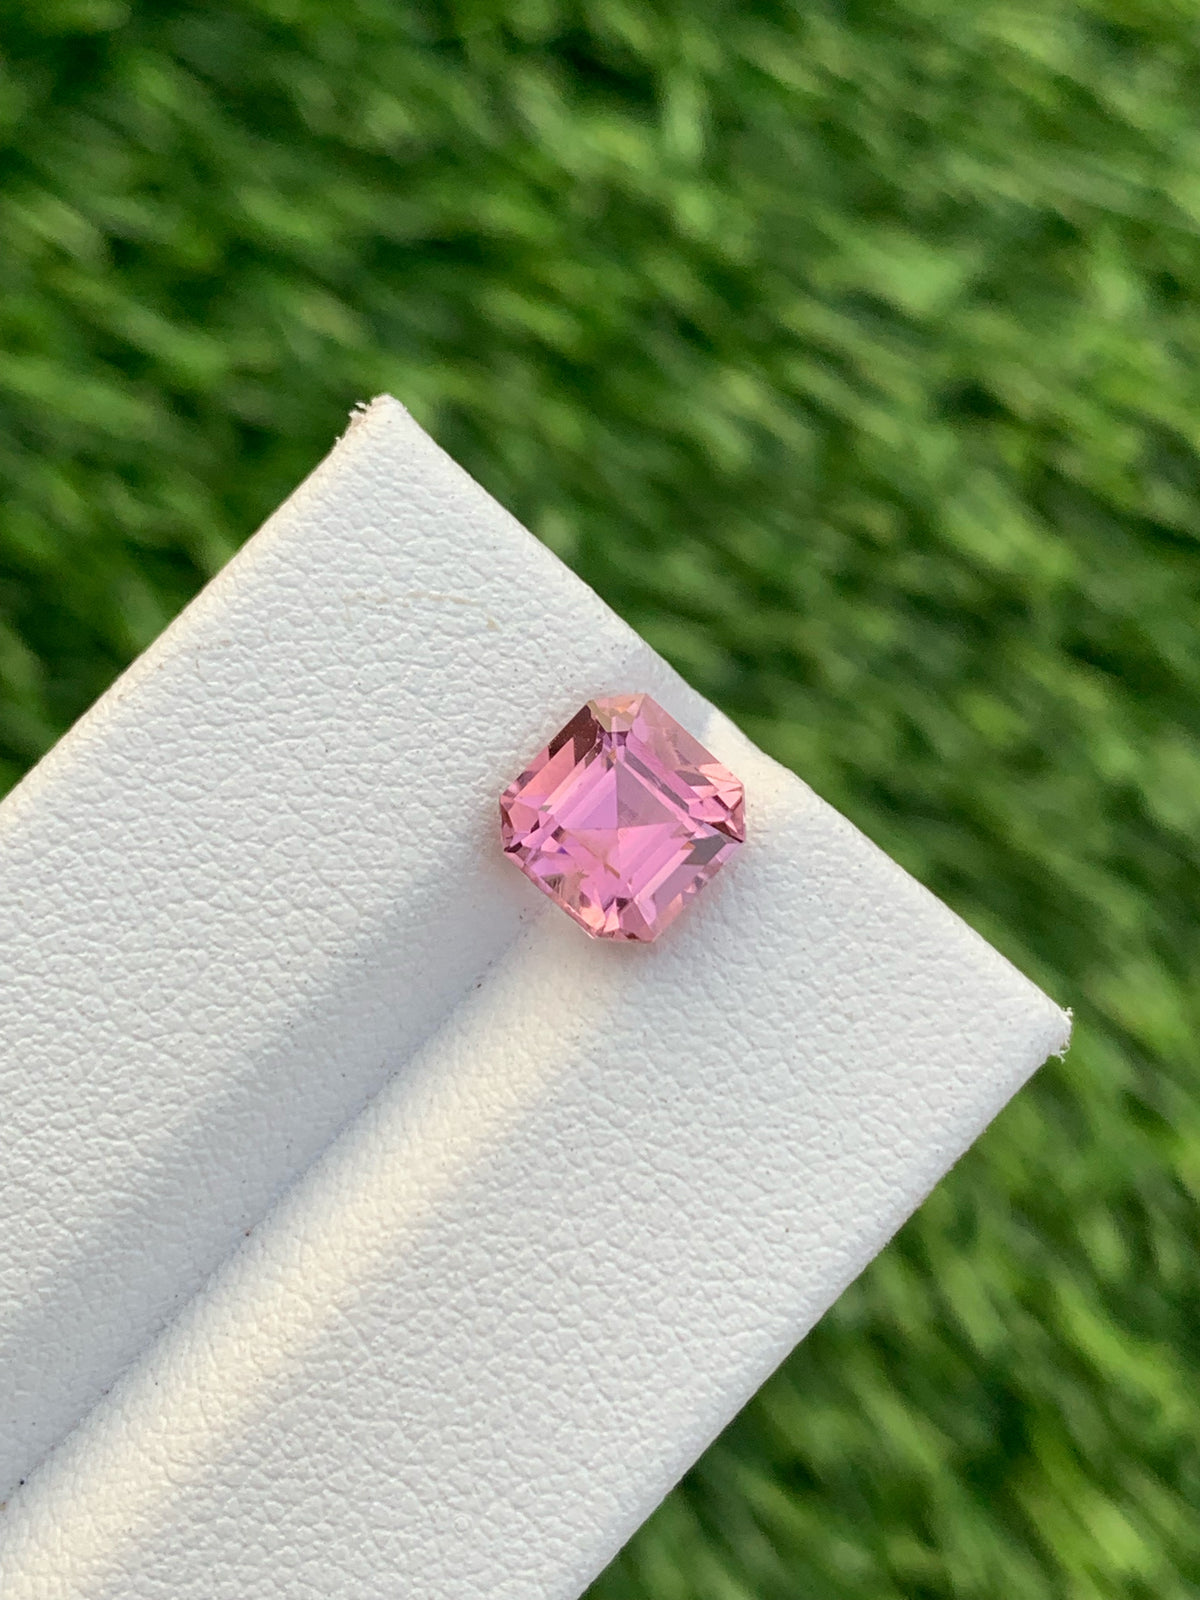 Pretty Soft Pink Tourmaline gemstone